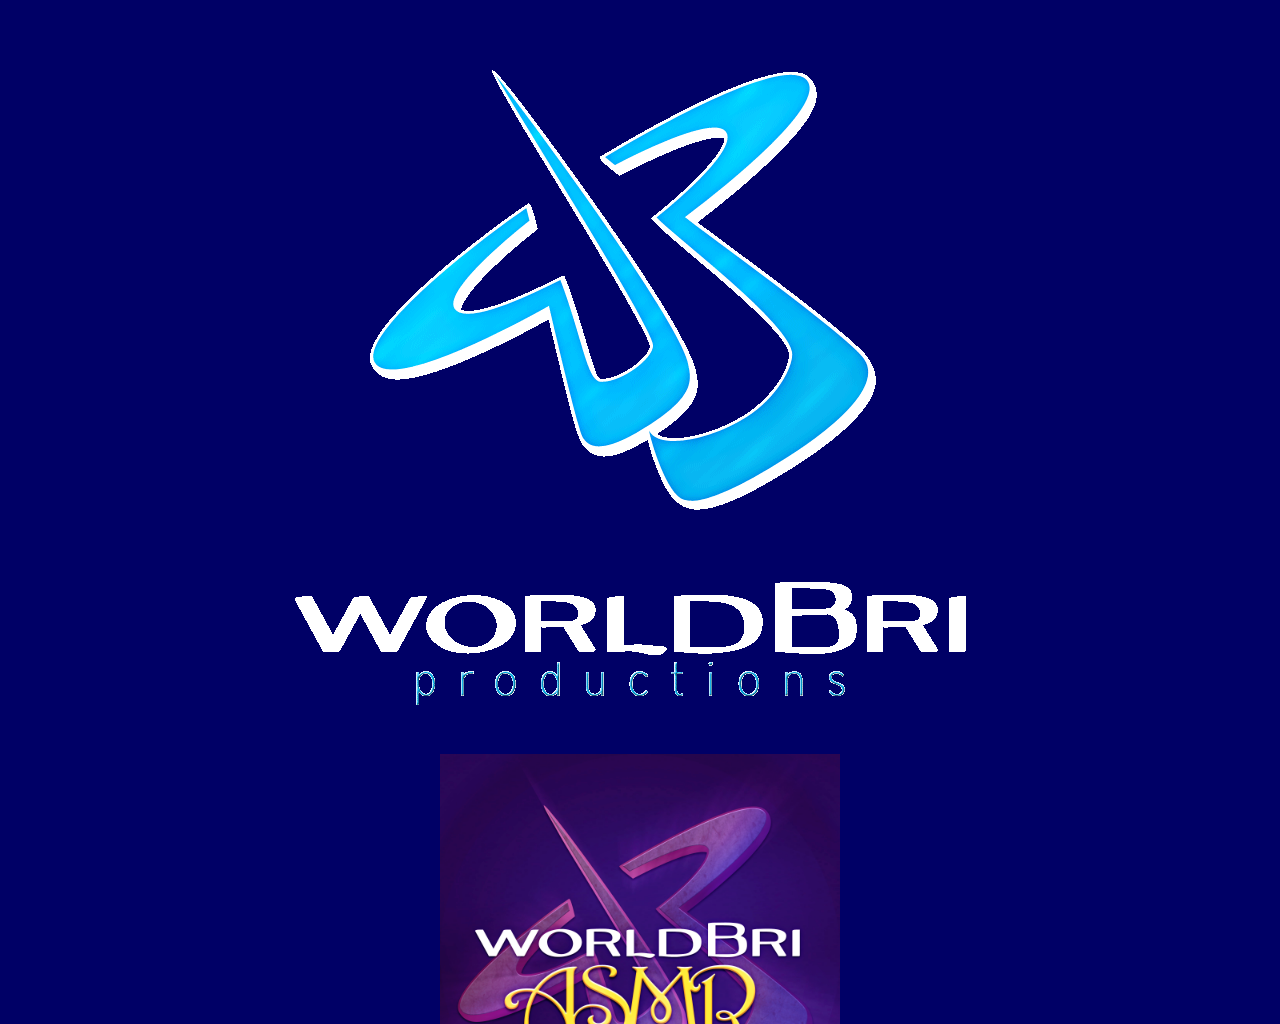 worldbri.com